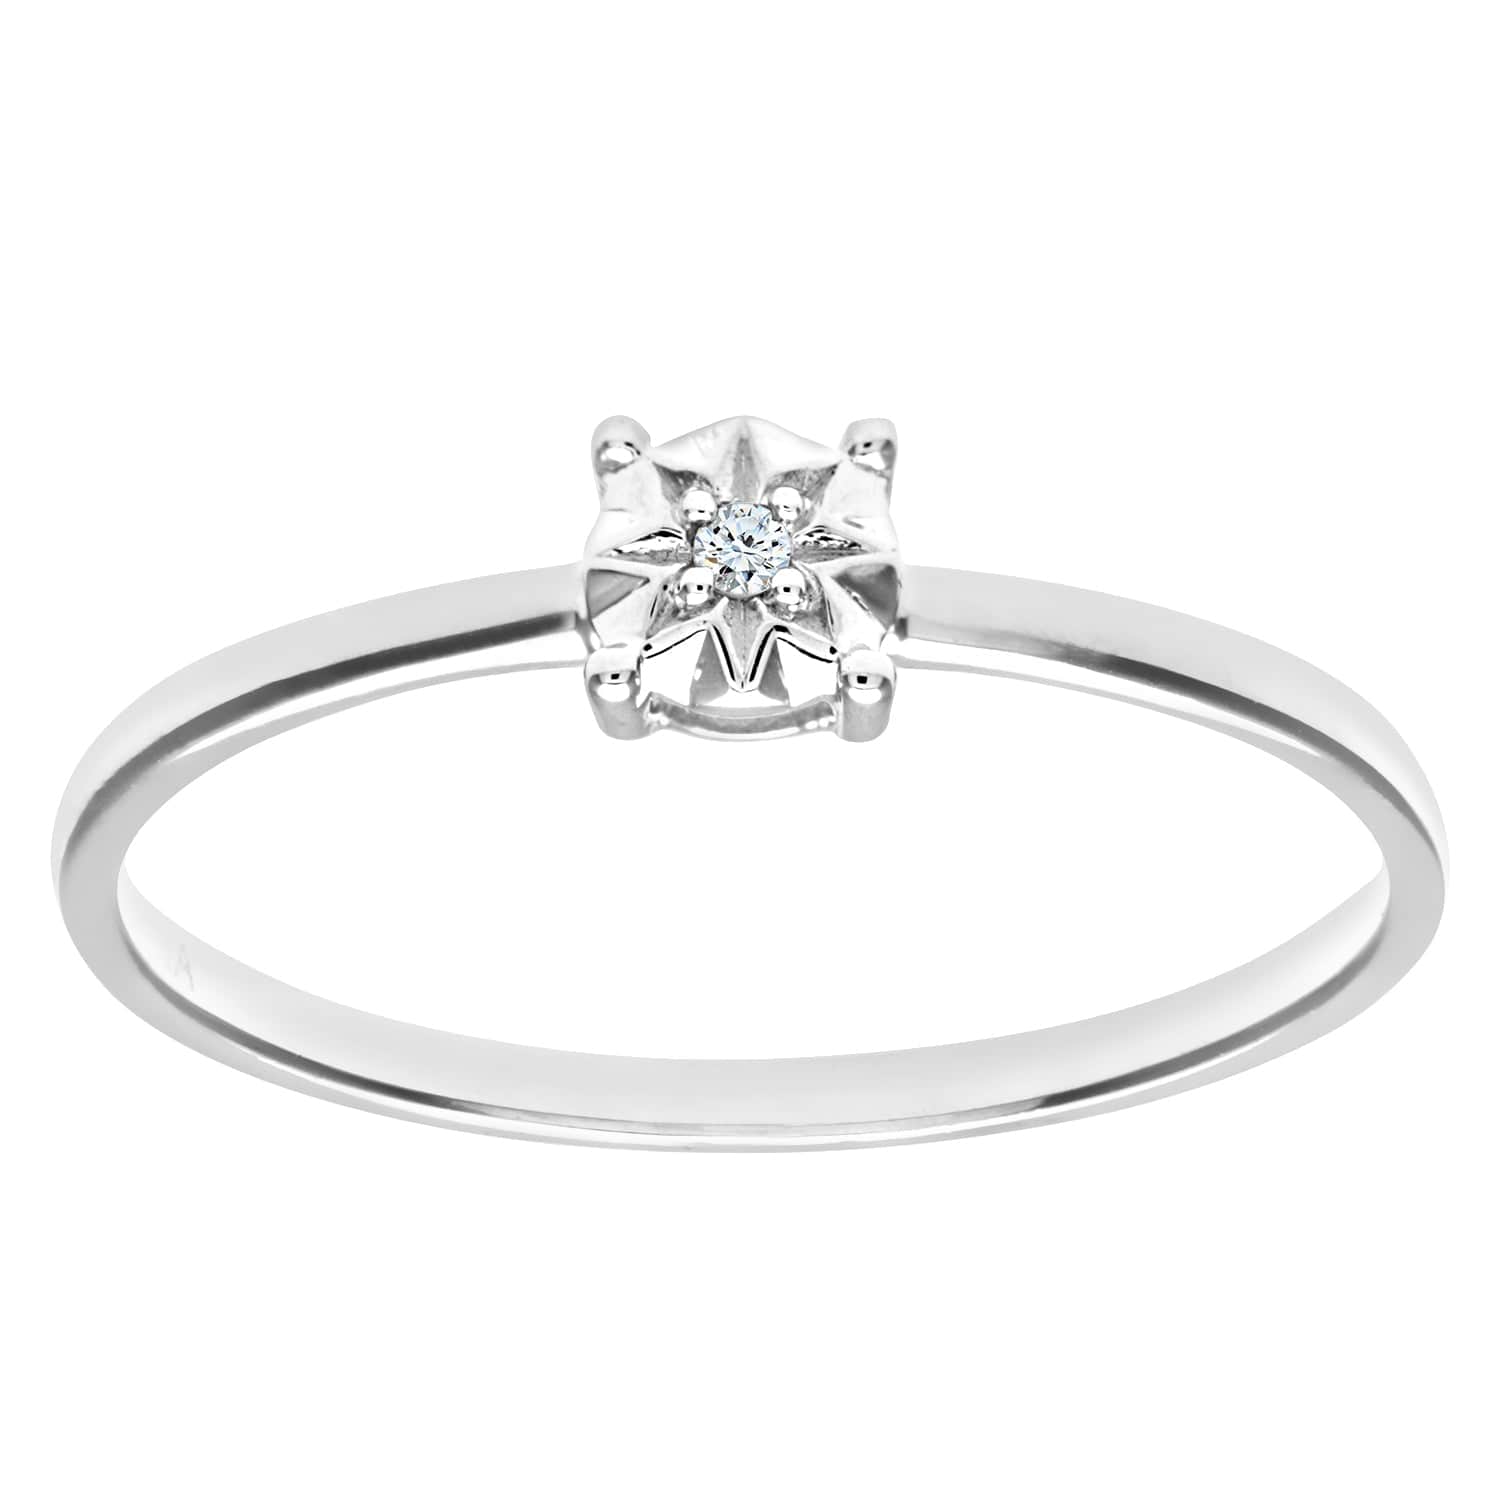 Lynora Luxe Ring White Gold 9ct / Diamond 9ct White Gold Solitare Diamond Ring